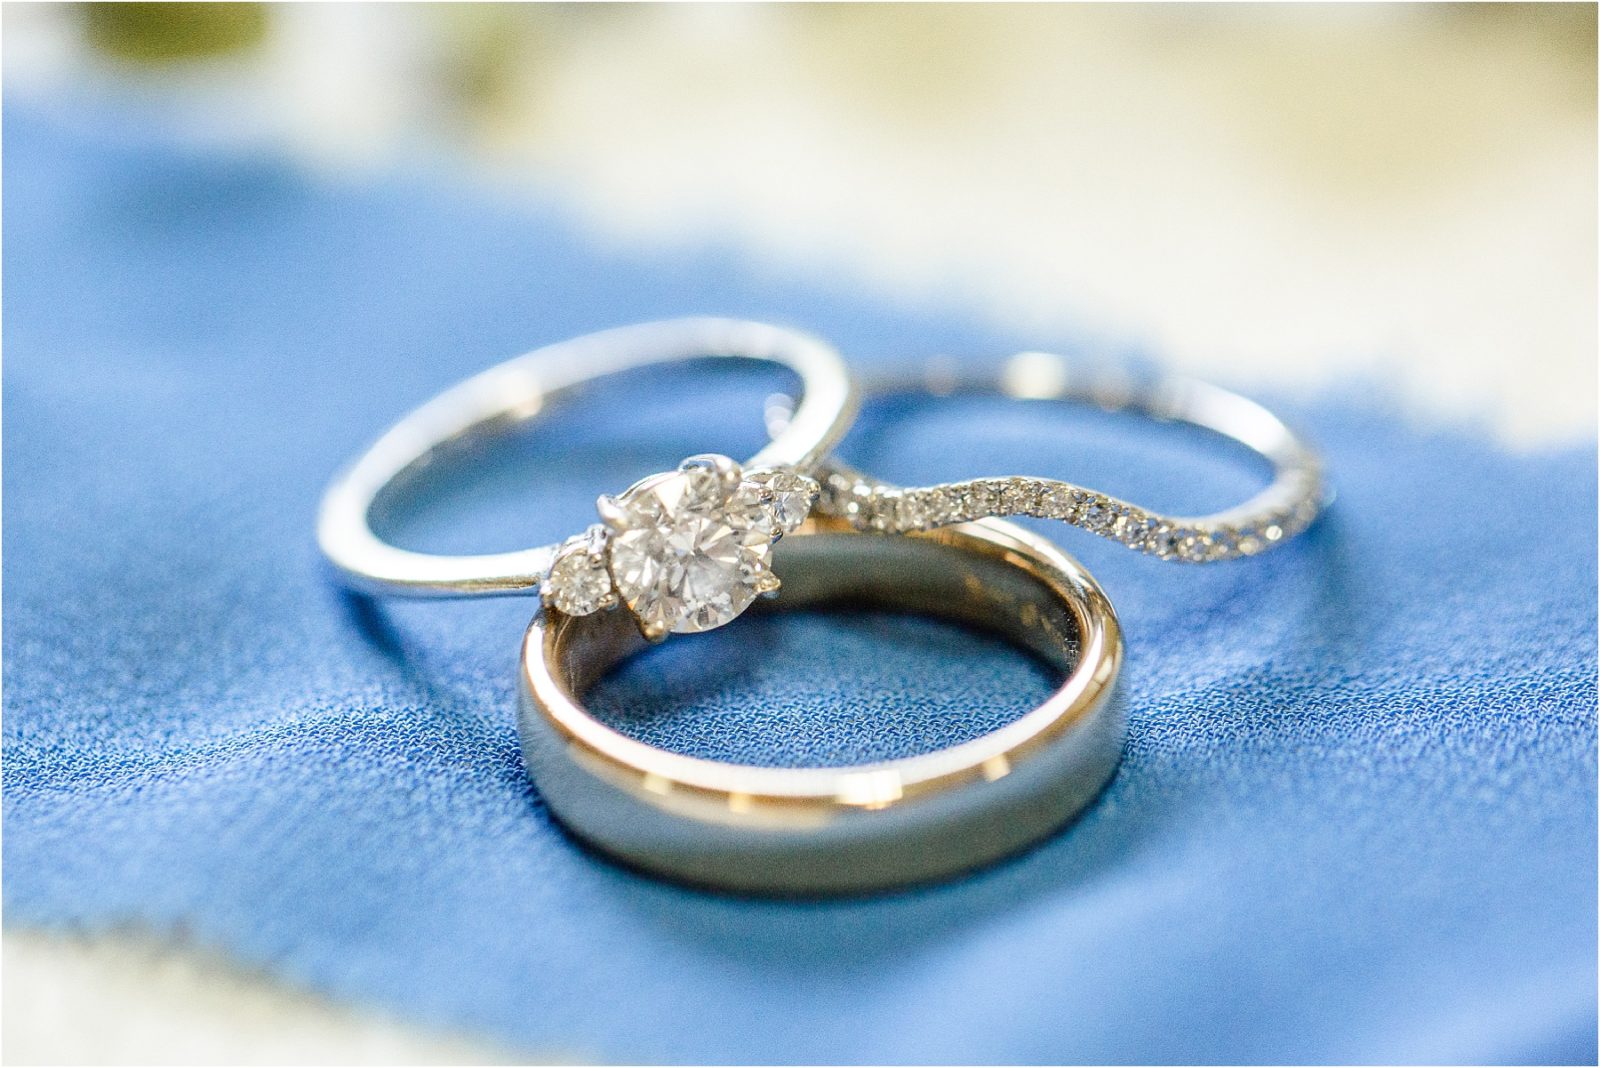 Wedding rings on blue ribbon